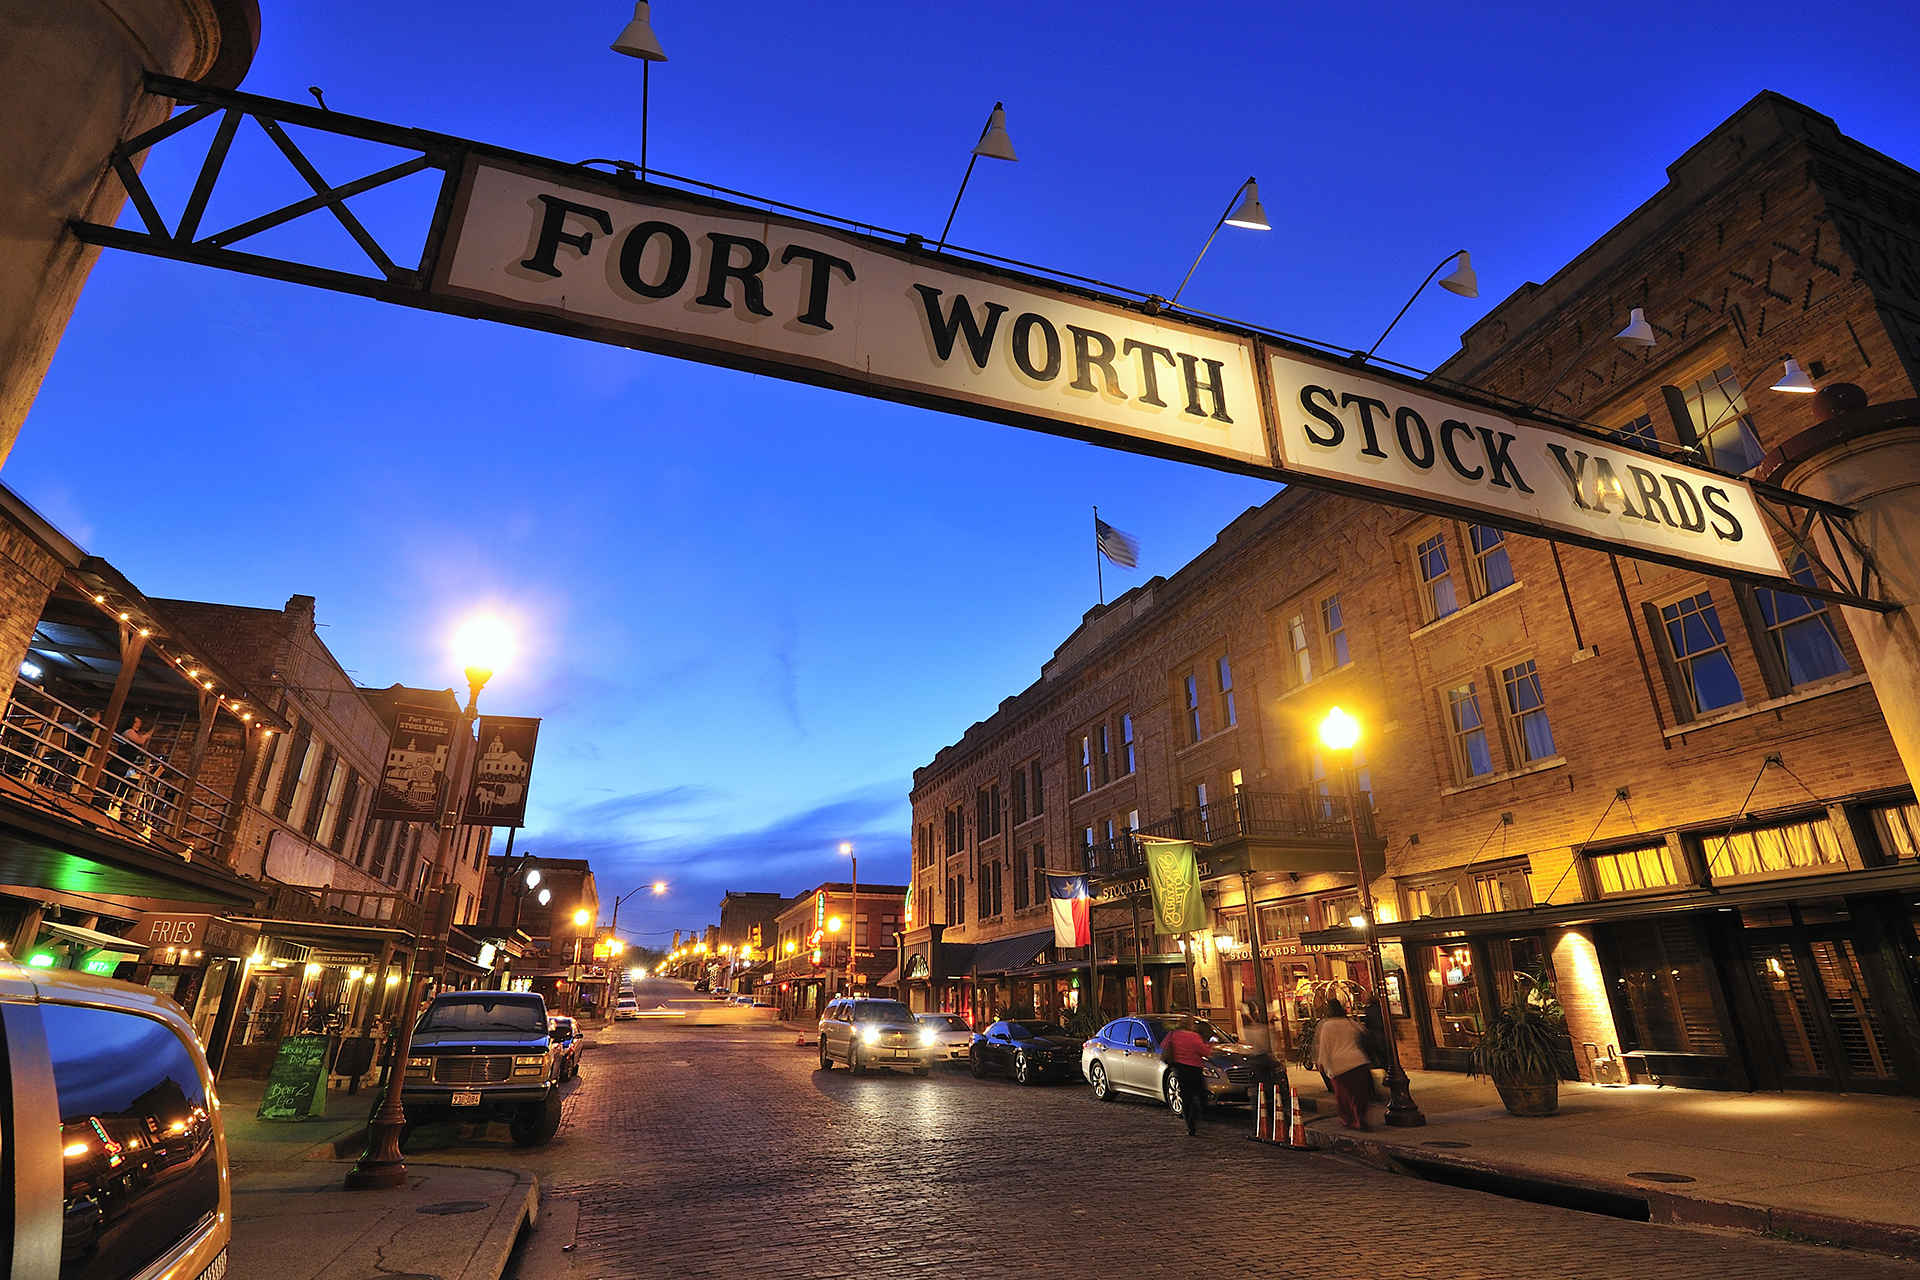 Fort Worth Texas